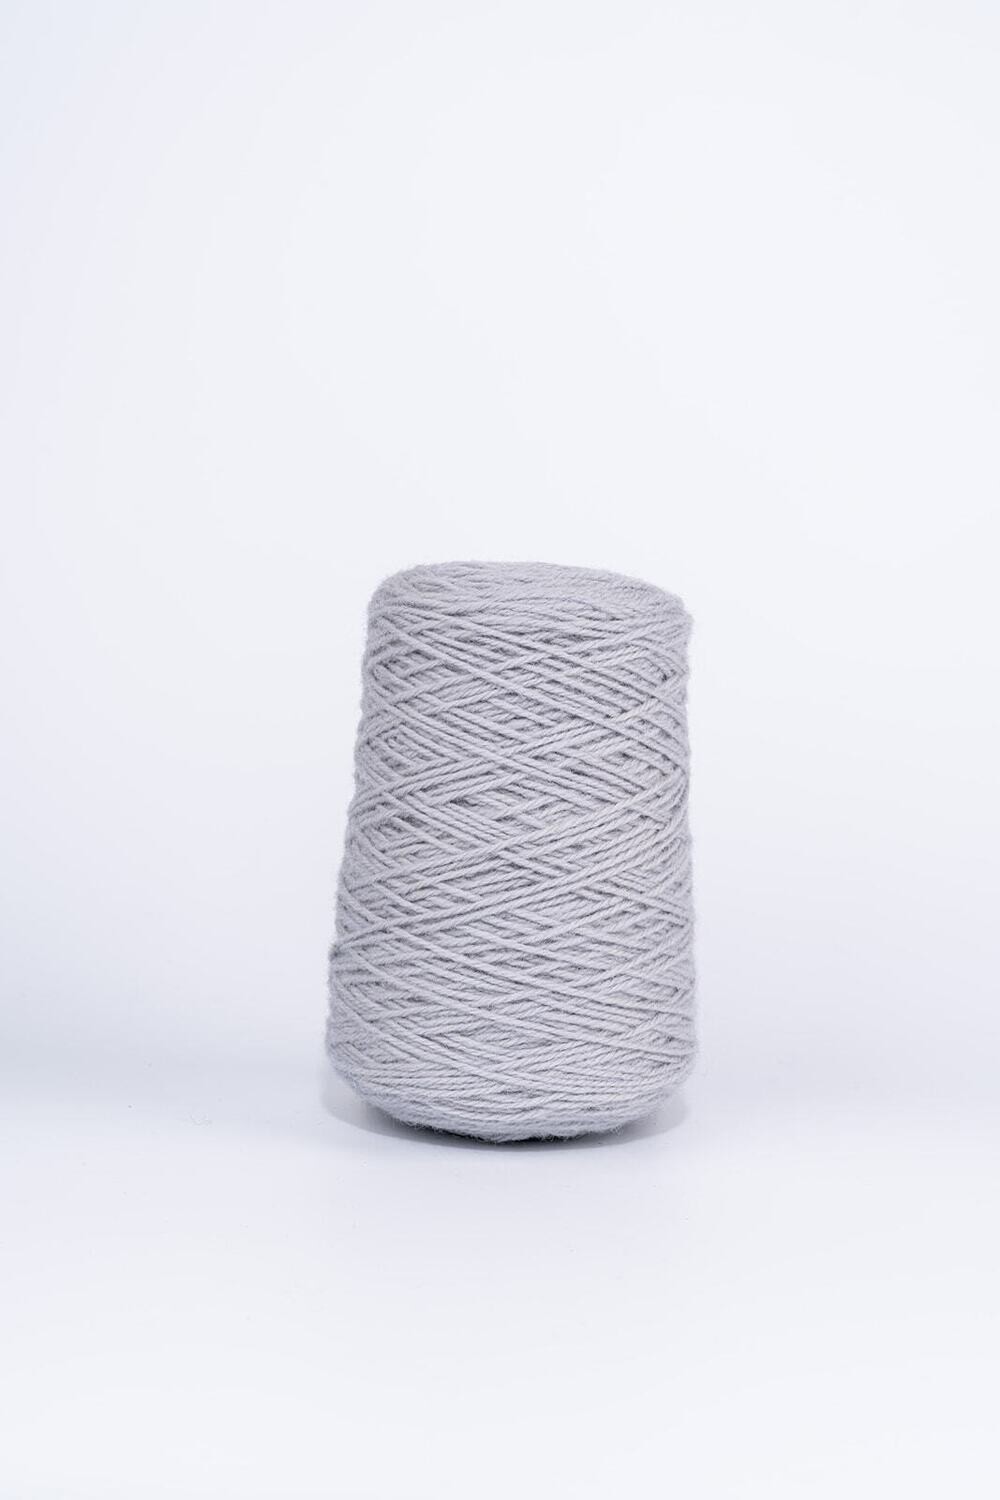 100% Wool Rug Yarn On Cones - Smokey Grey